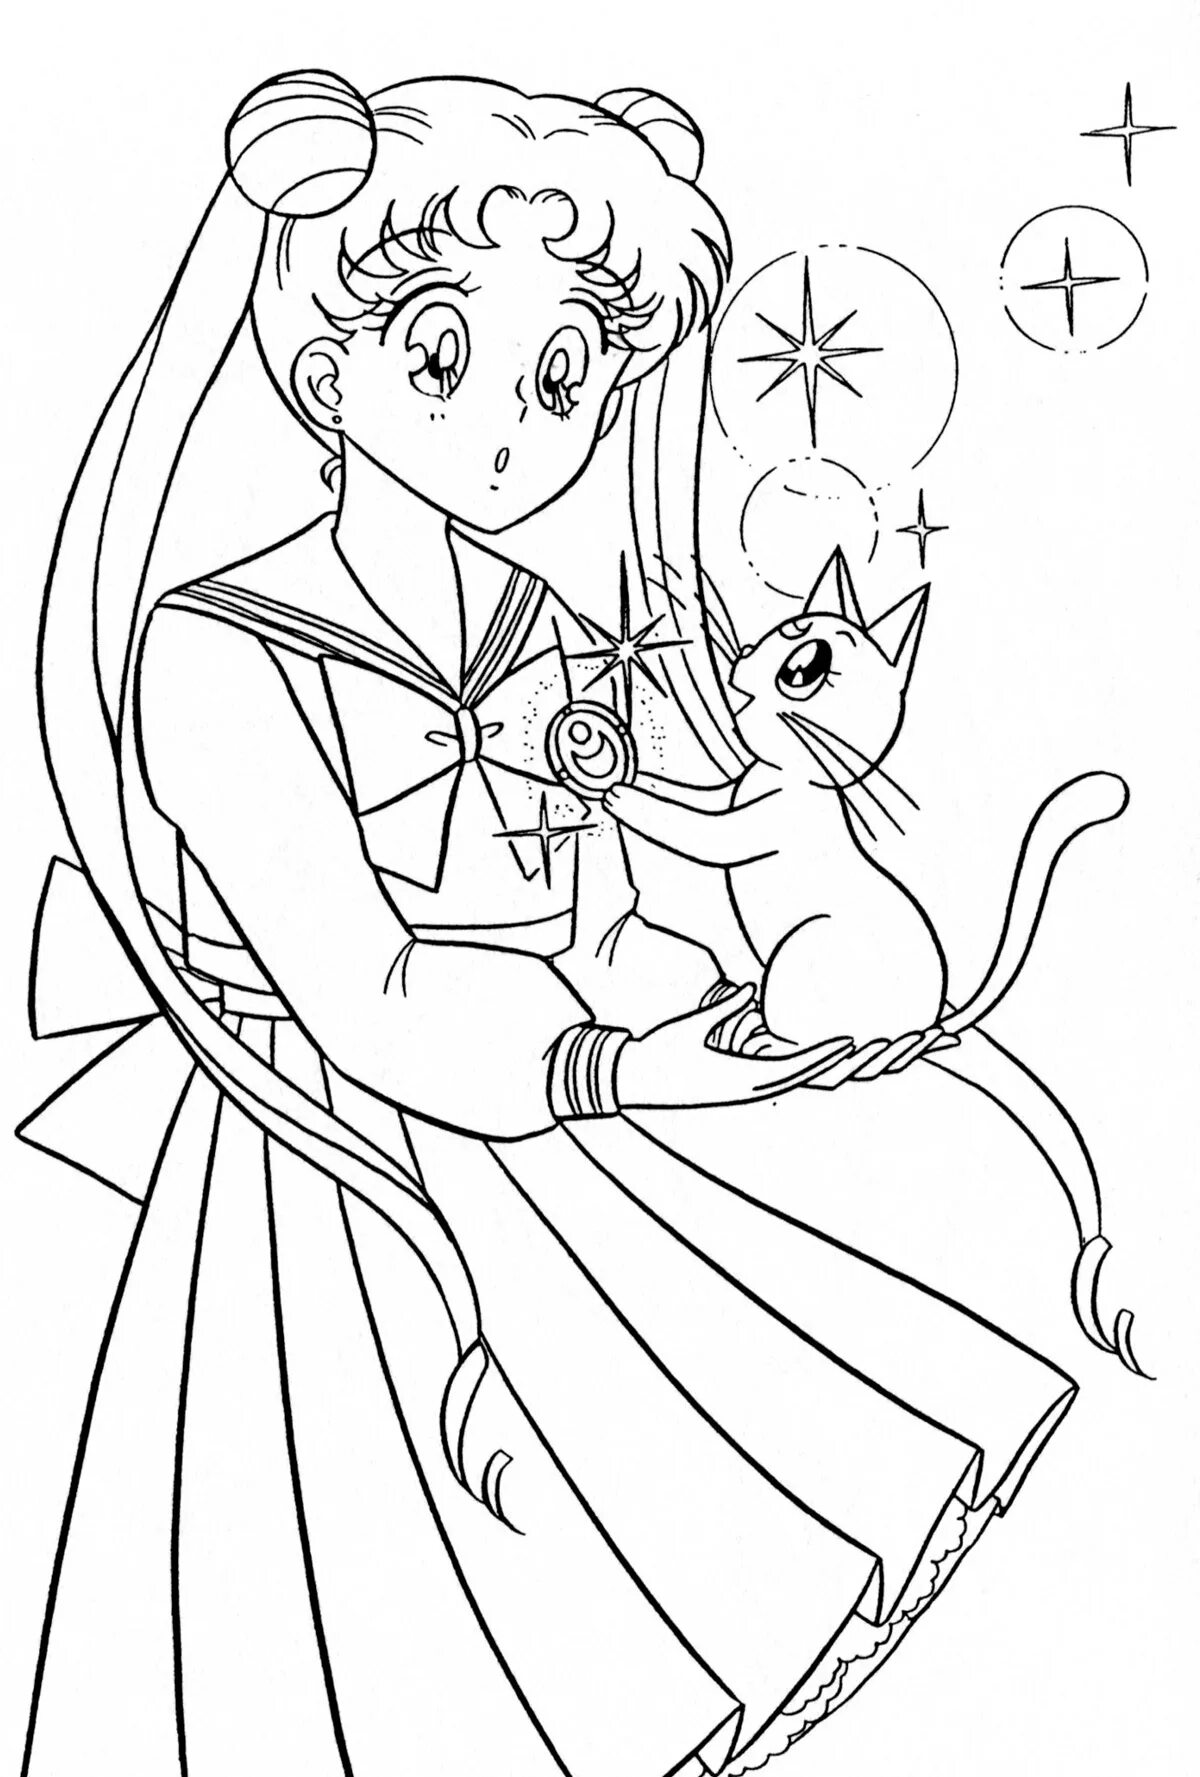 Sailor moon coloring inspiration